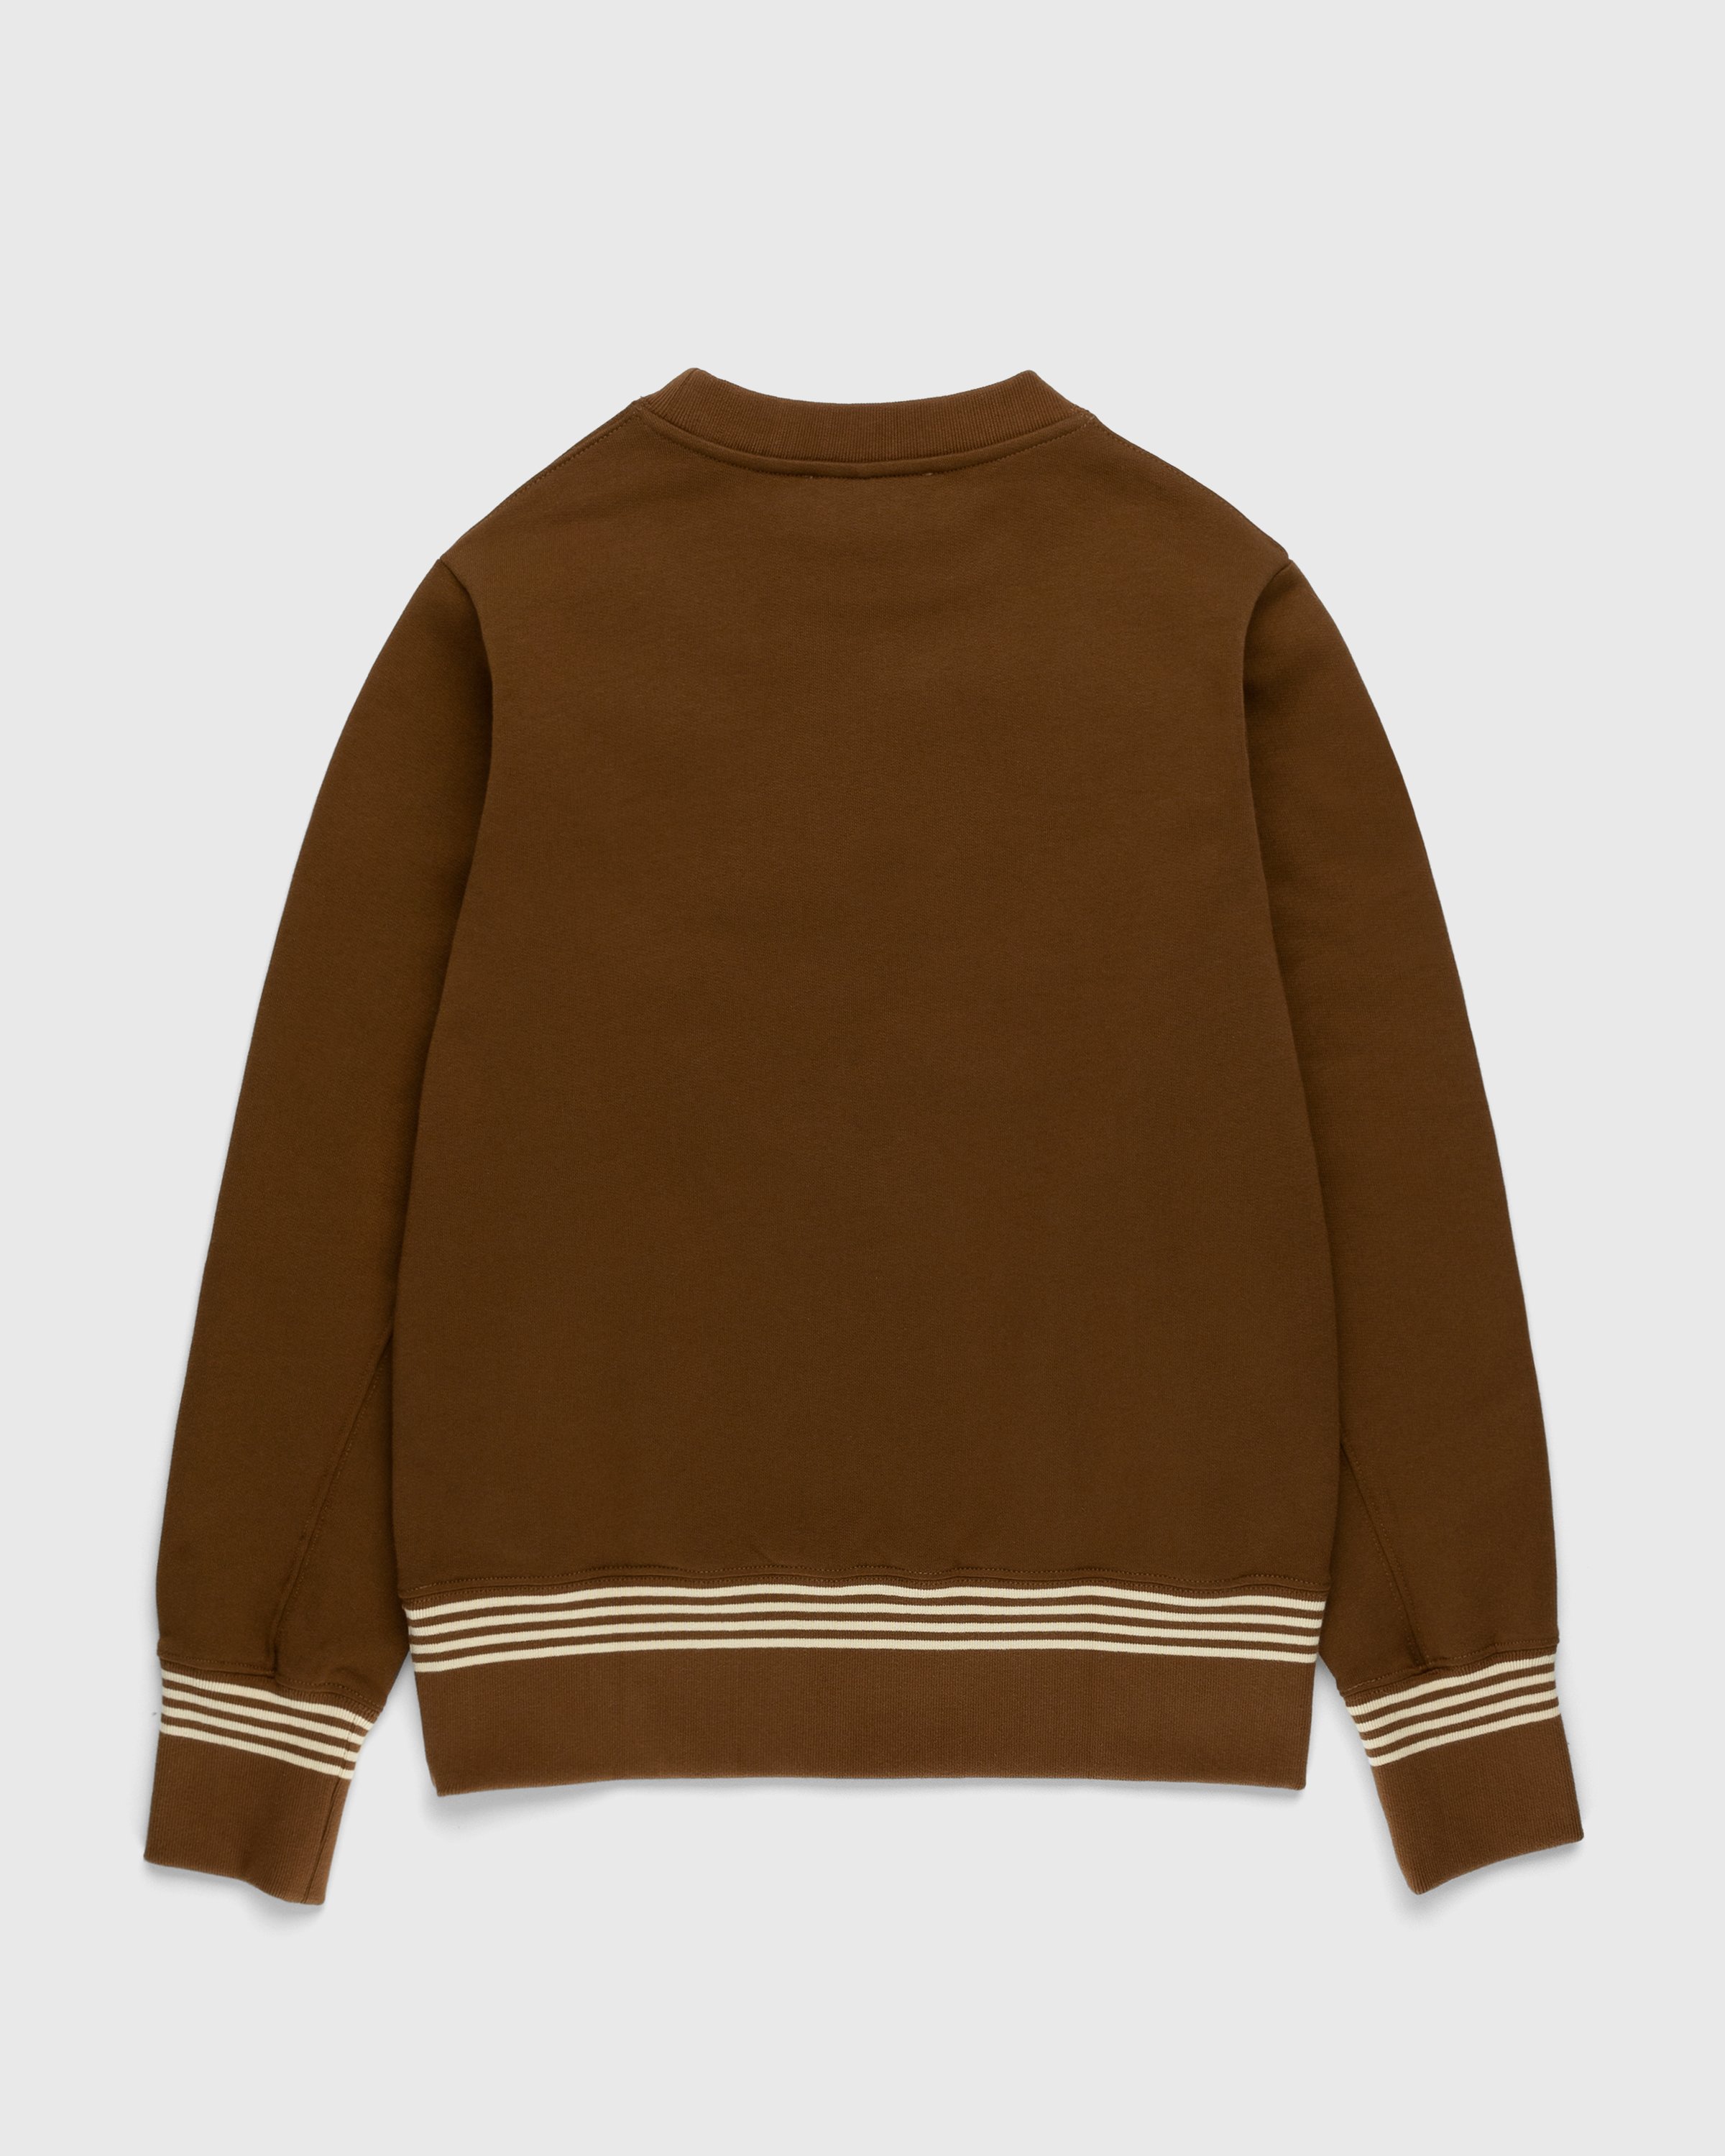 Wales Bonner - Original Sweatshirt Brown - Clothing - Brown - Image 2